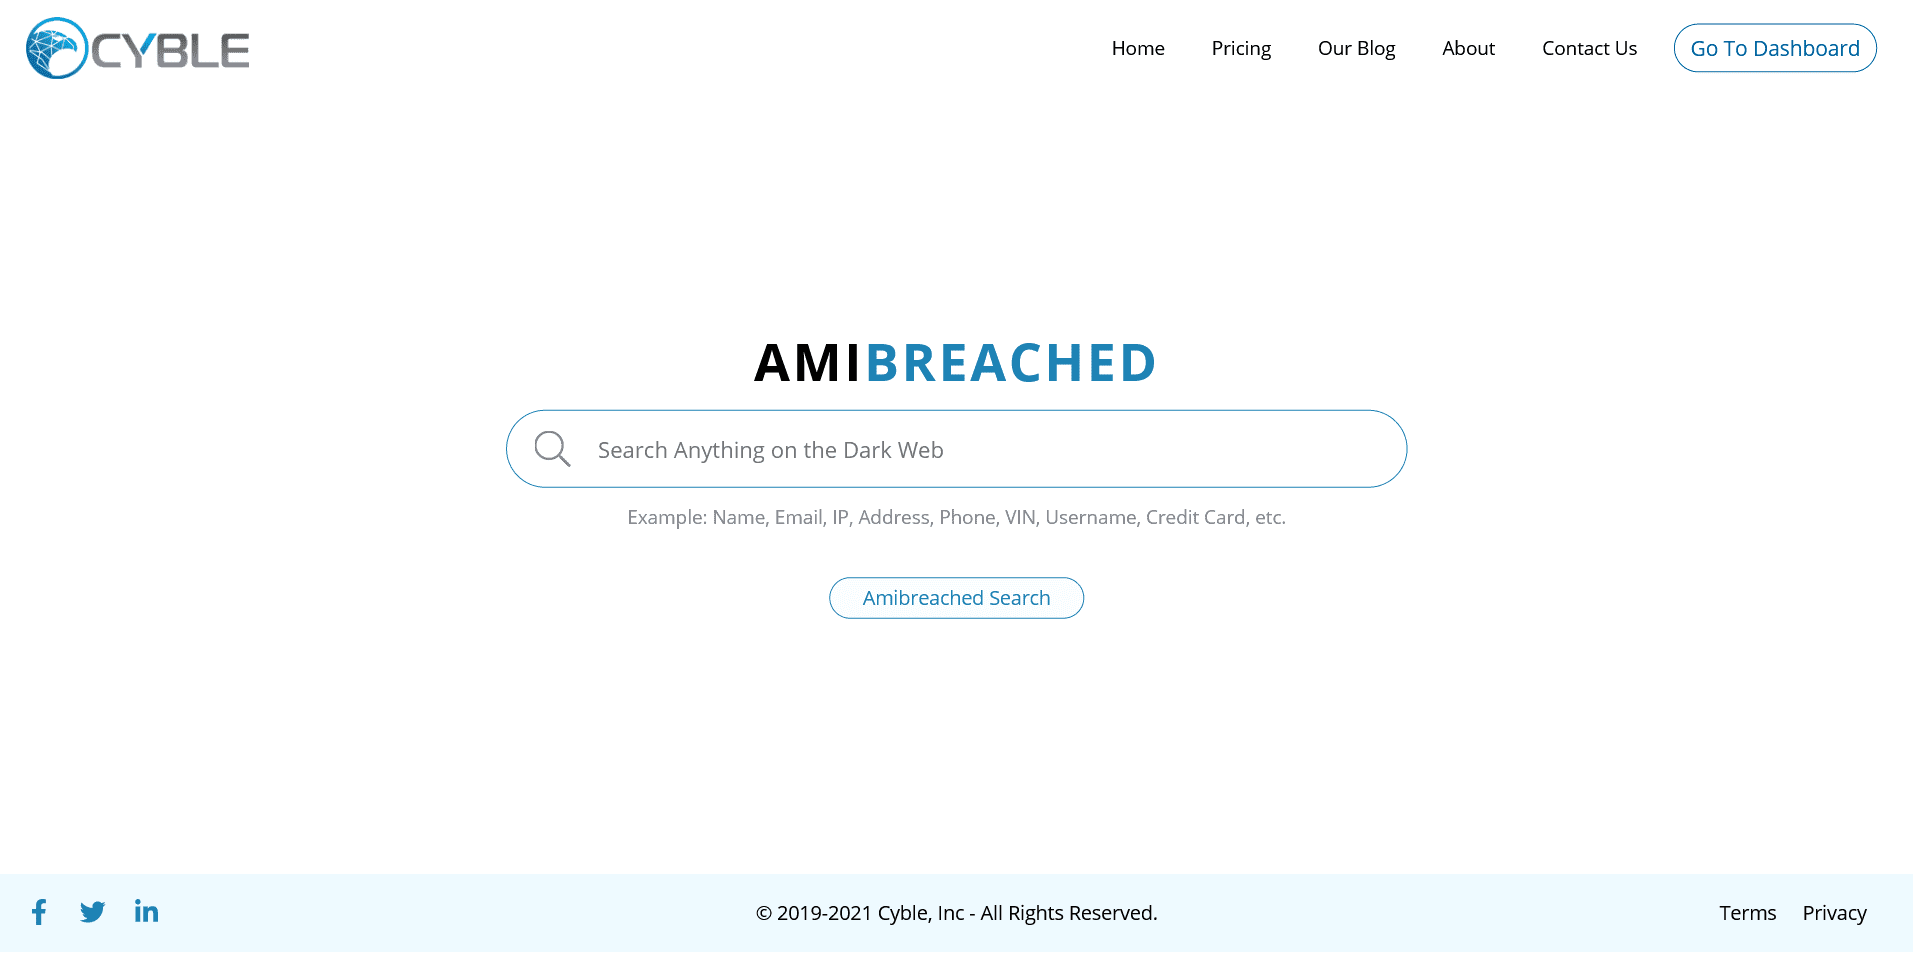 AmIBreached